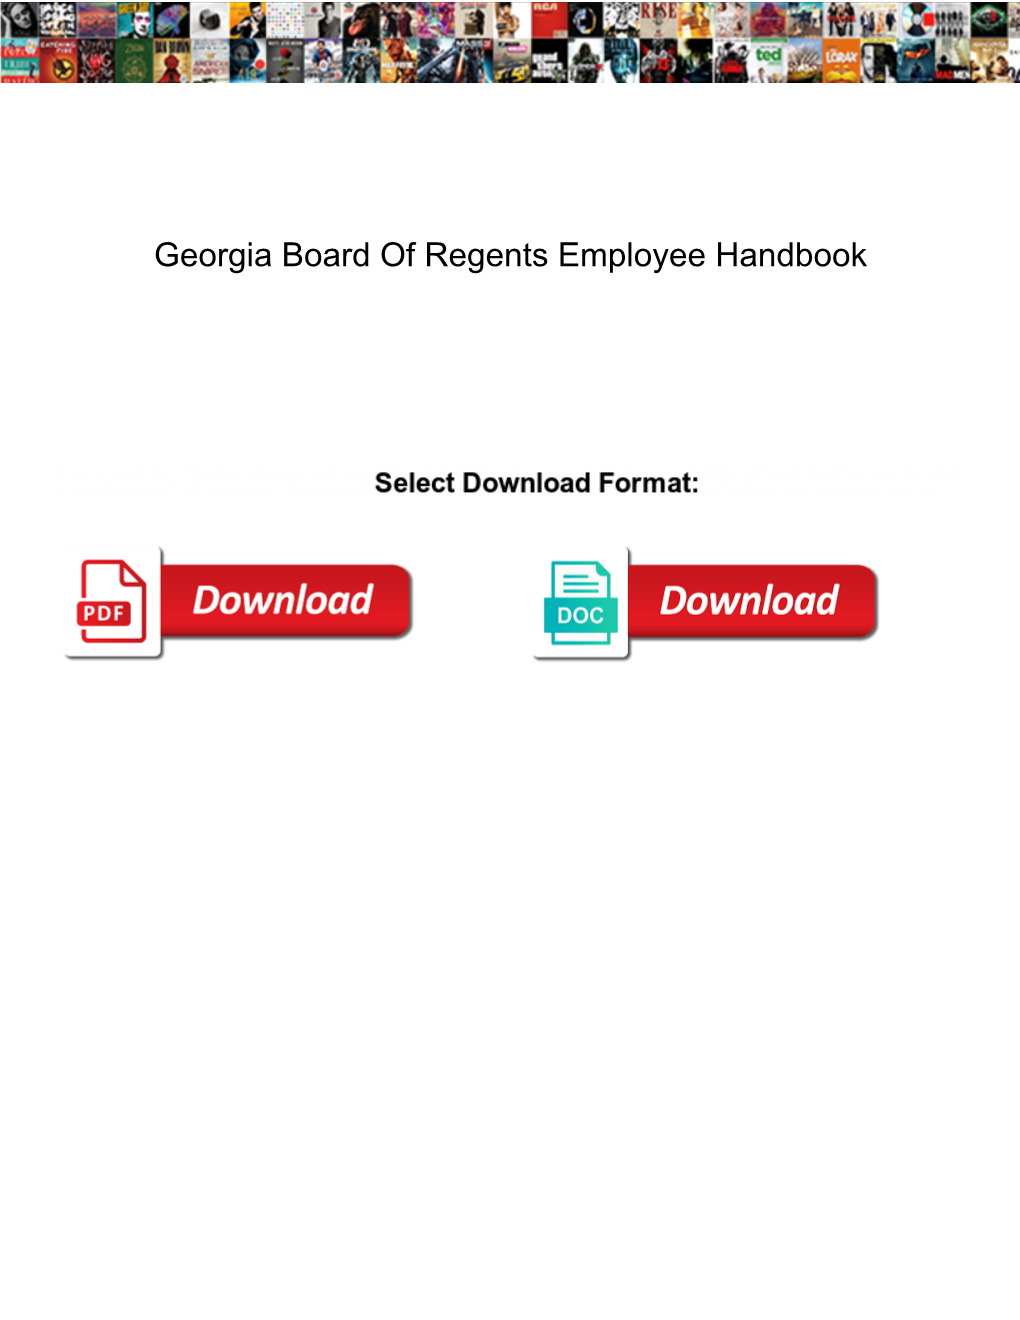 Georgia Board of Regents Employee Handbook